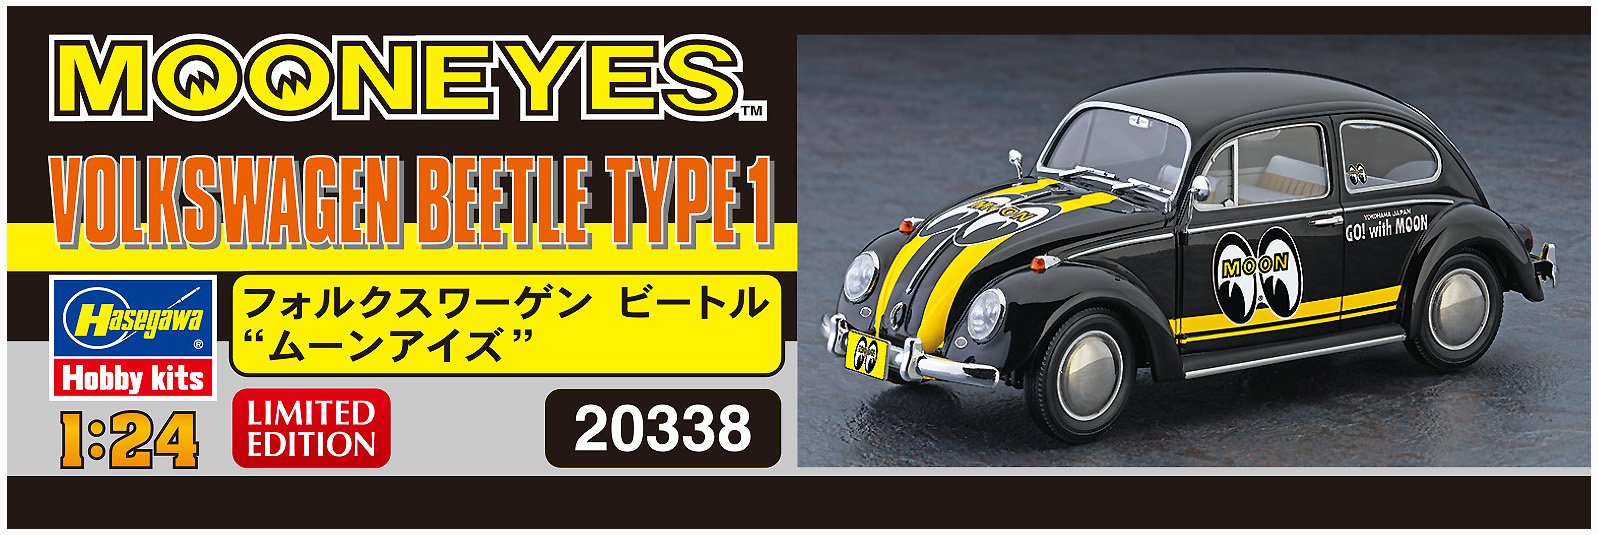 Hasegawa 20338 Volkswagen Beetle Moon Eyes 1/24 Kit de modèle de voiture en plastique